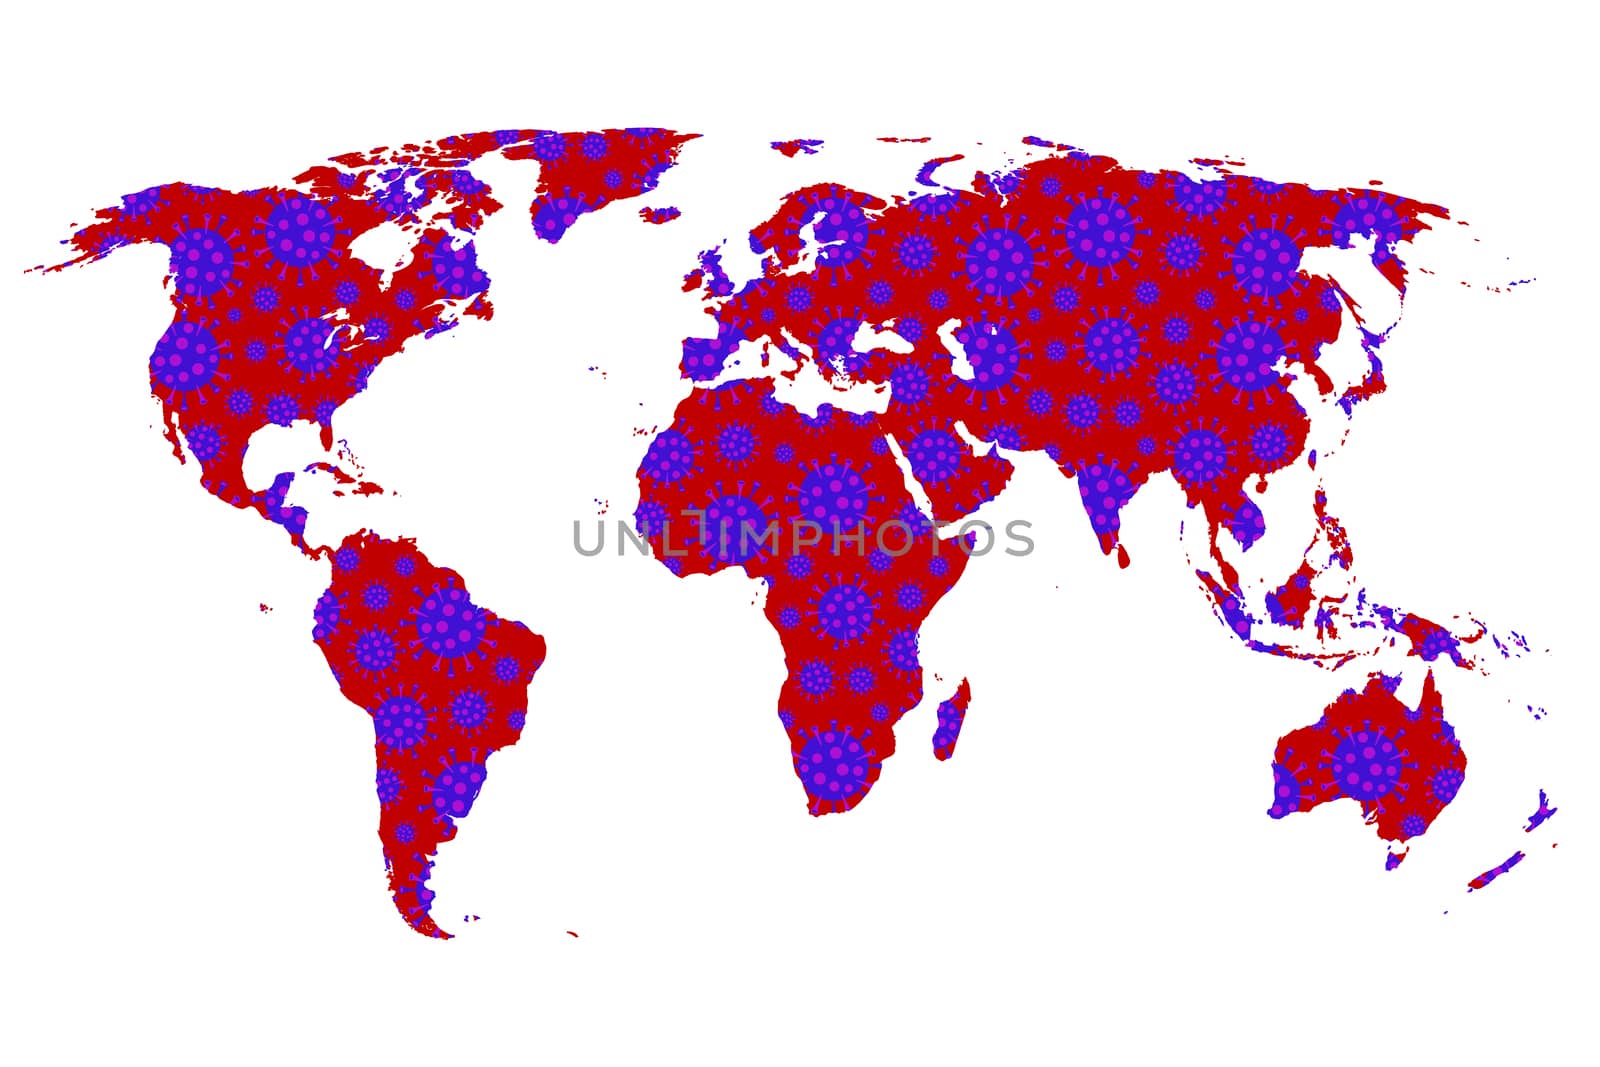 Stylized World map with Coronavirus (Covid-19) over entire world by hibrida13